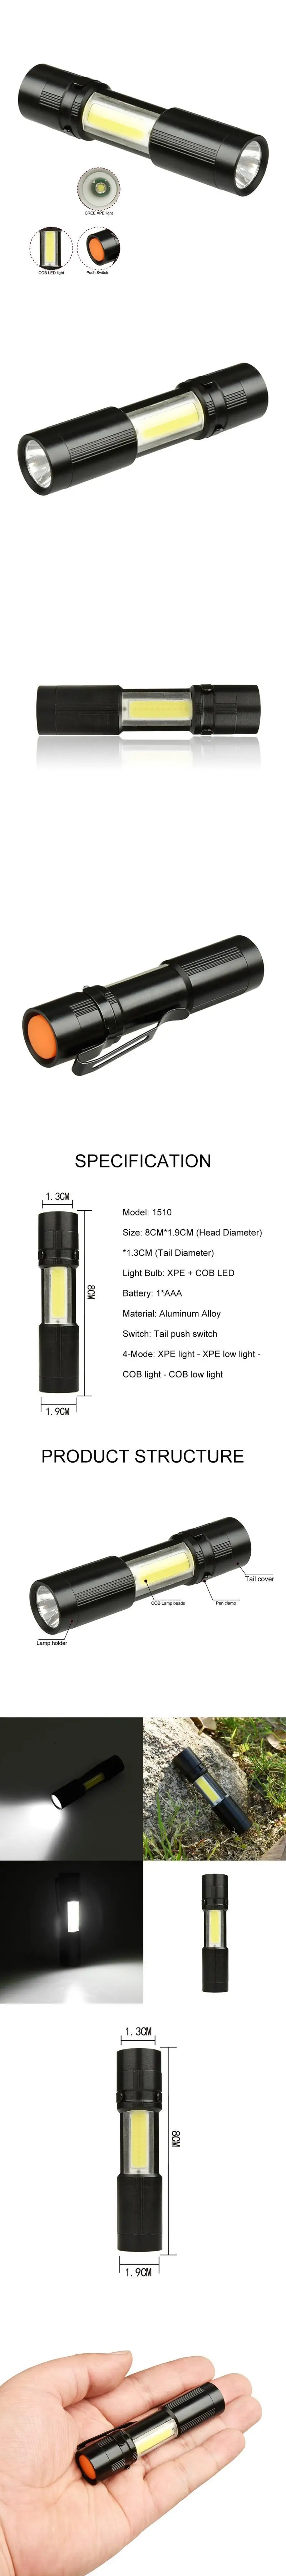 SKYWOLFEYE мини XPE фонарик 5000 люмен 4 режима Крепление для фонаря ФАКЕЛ наружного освещения